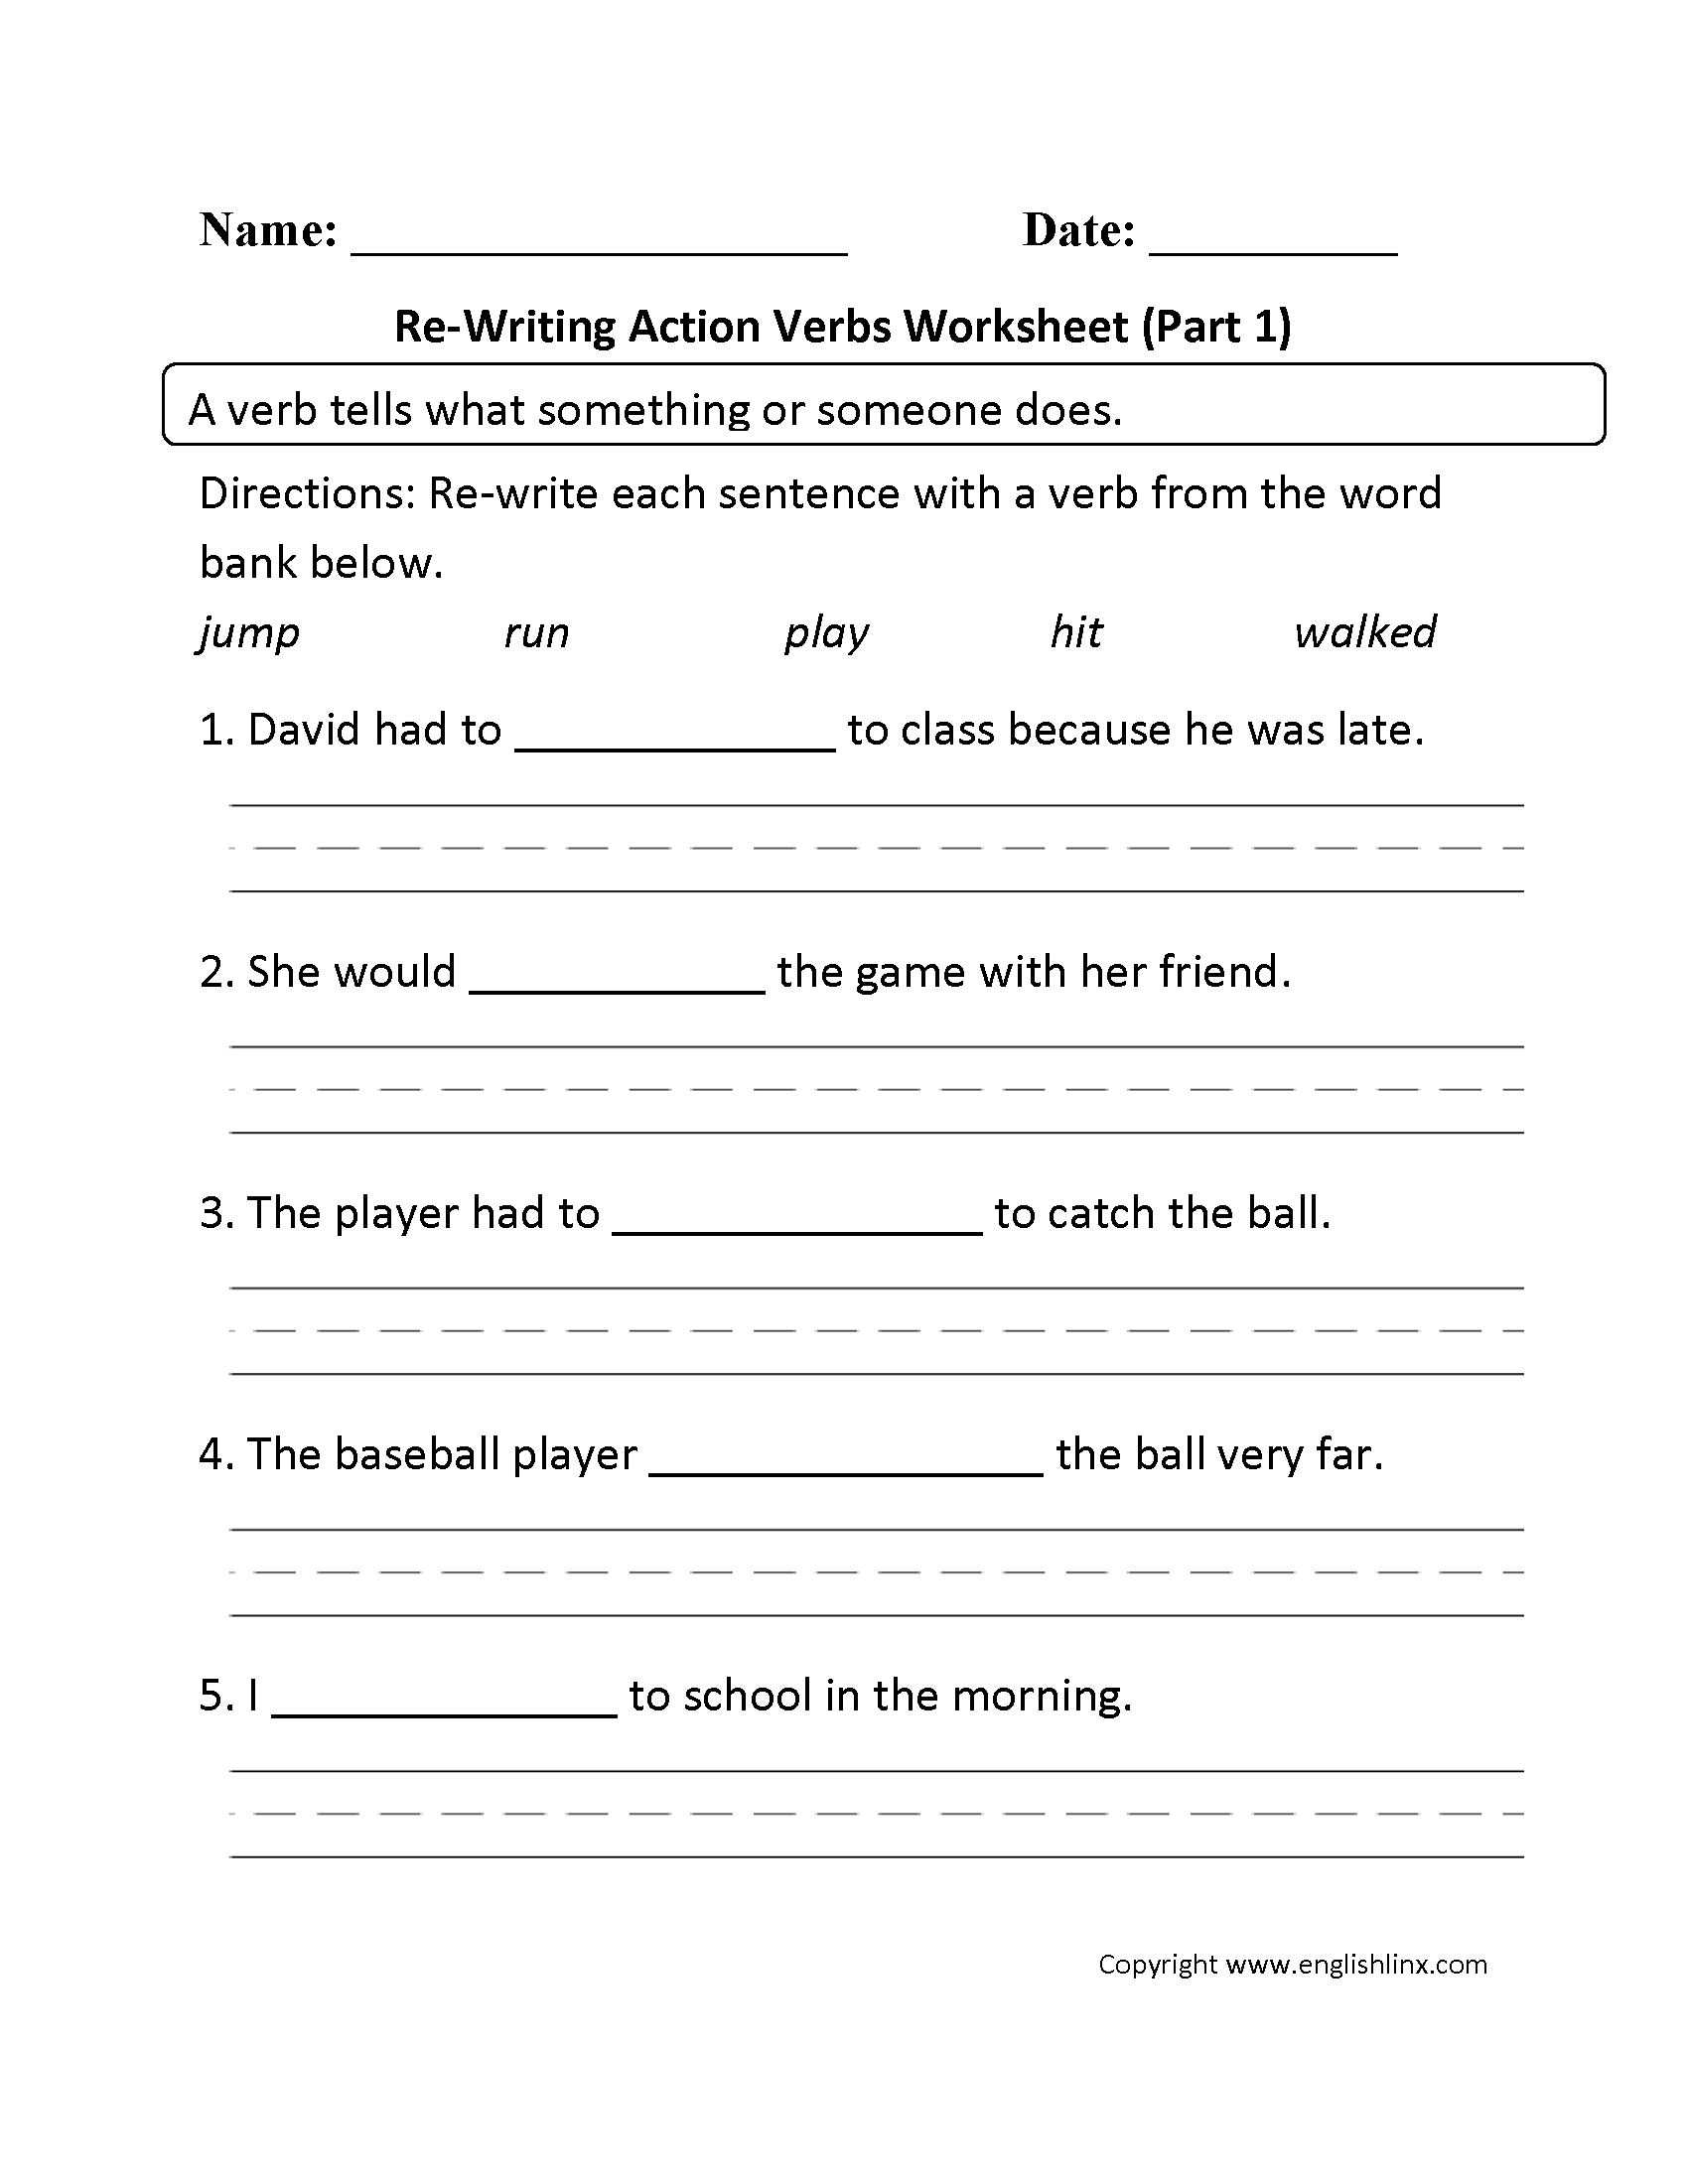 nouns-worksheets-and-printouts-free-printable-verb-worksheets-free